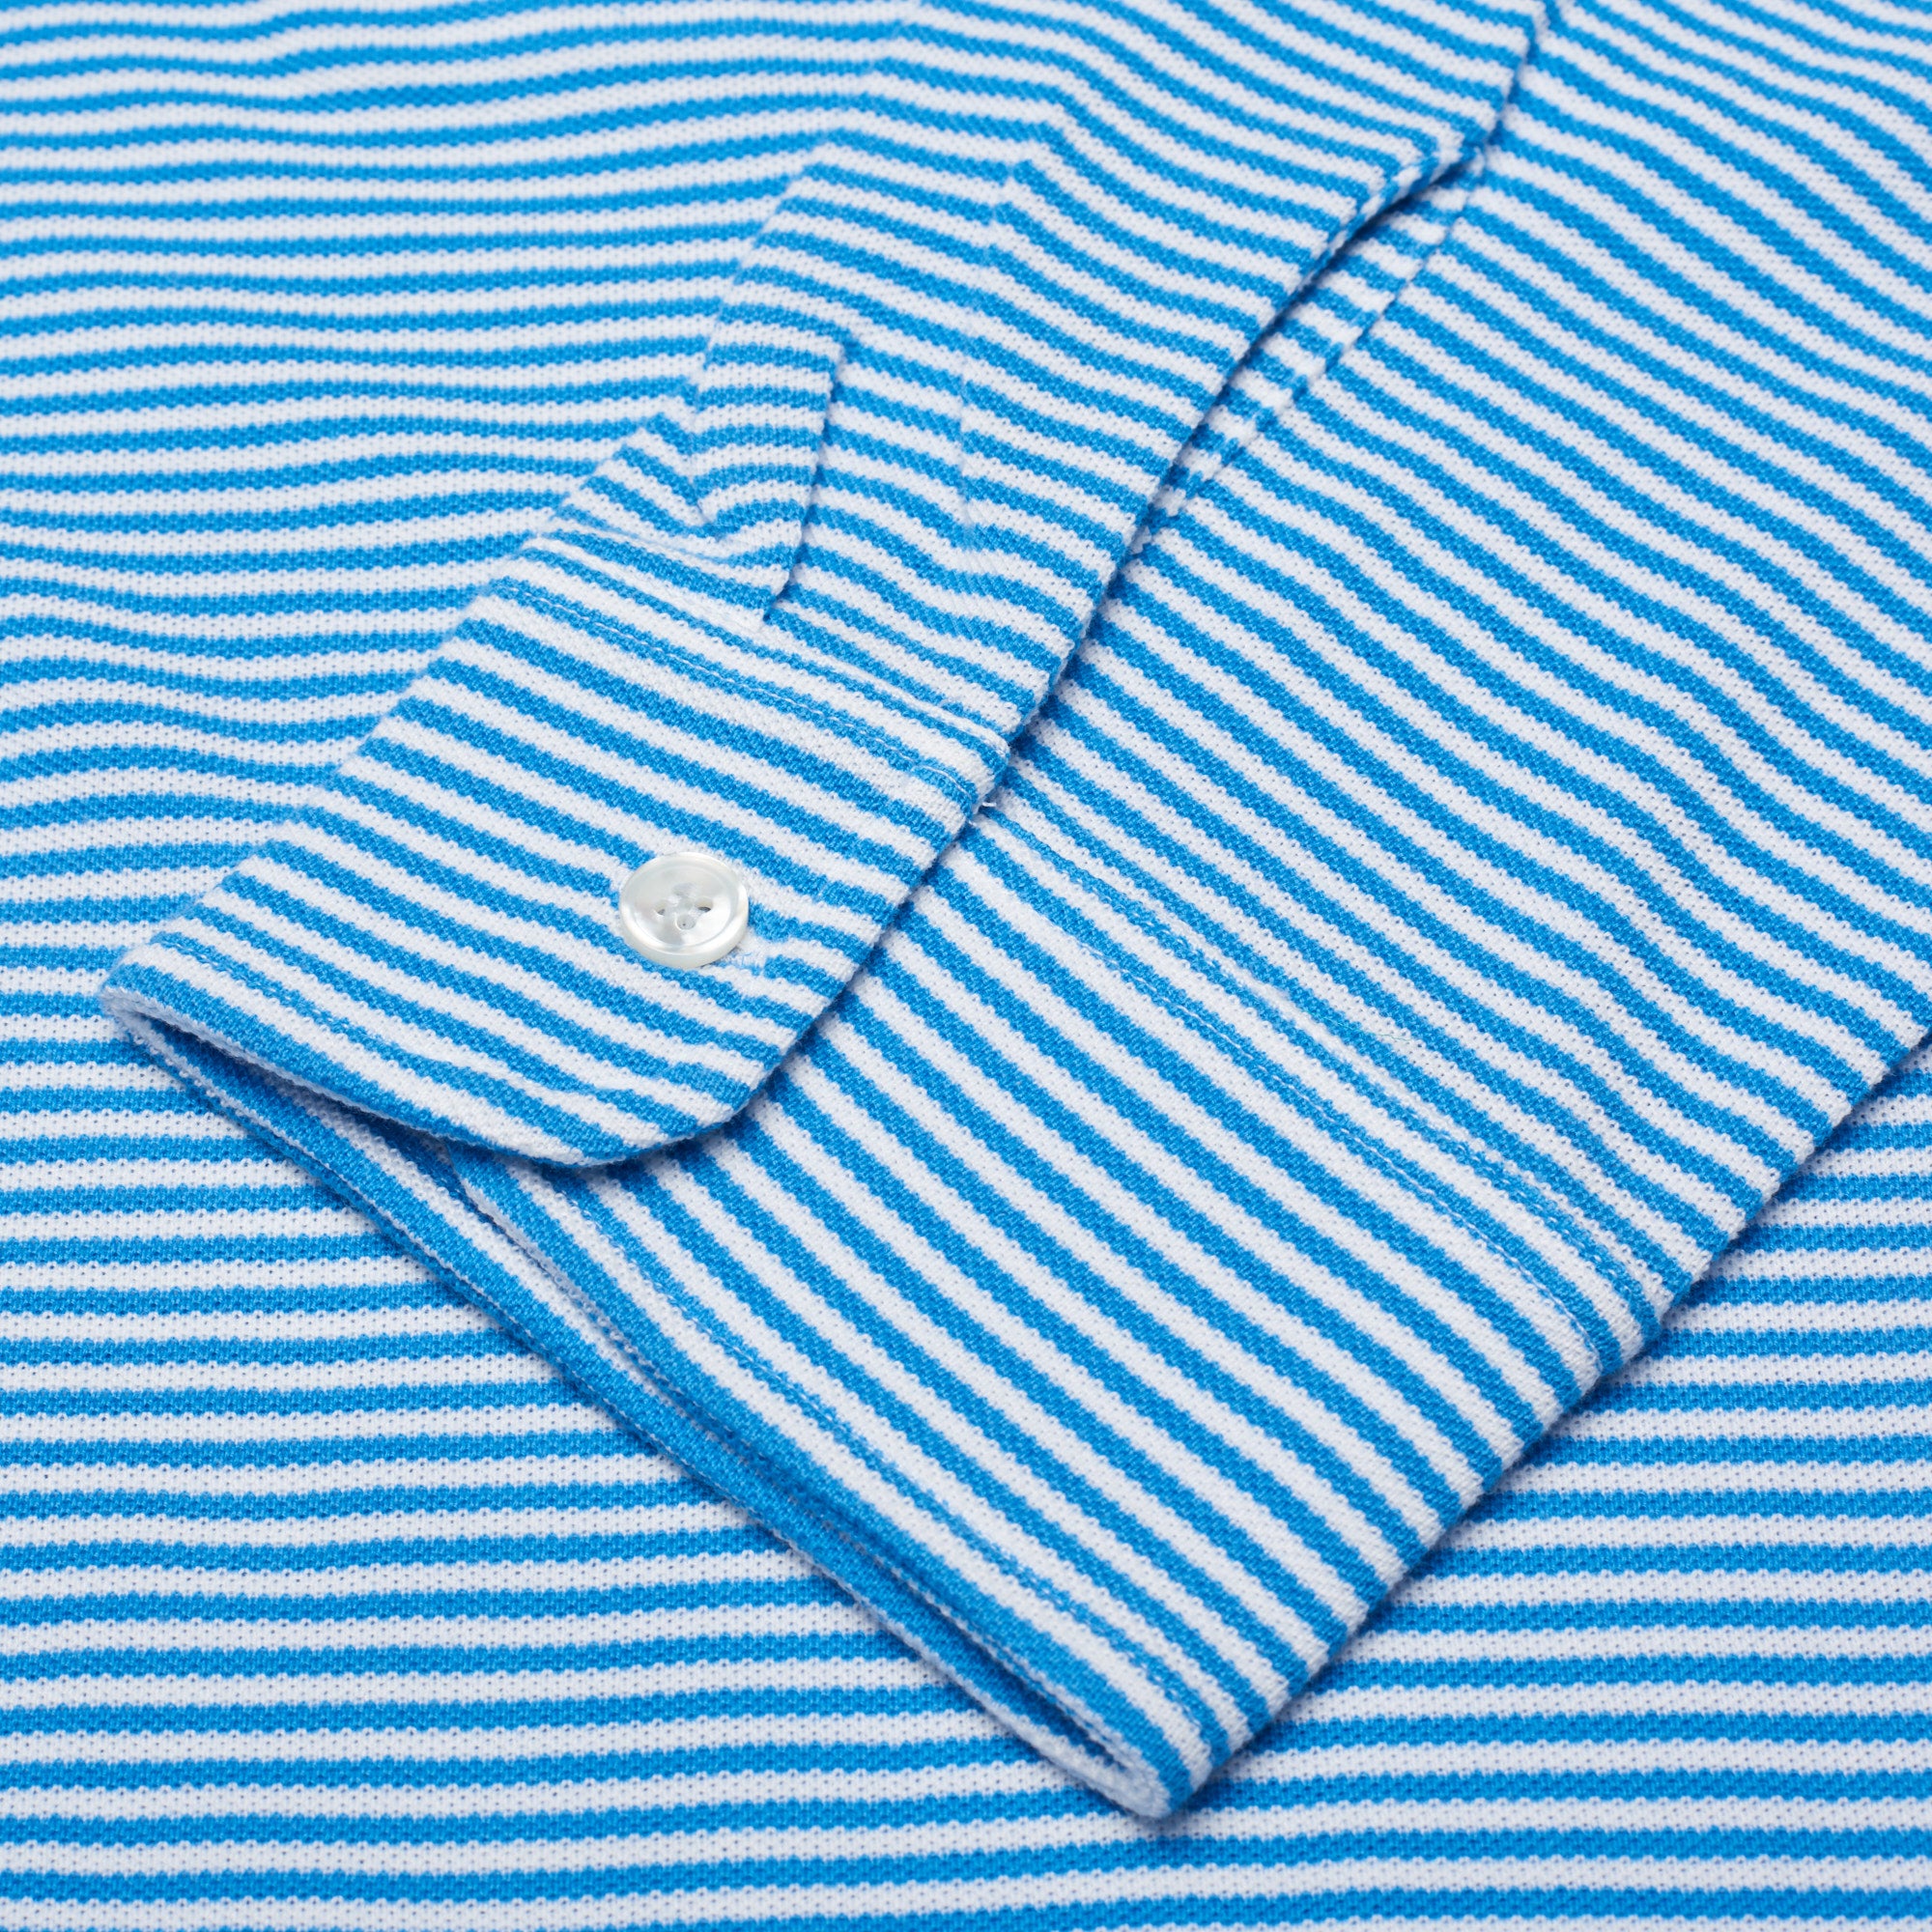 FEDELI Blue Striped Cotton Light Pique Long Sleeve Polo Shirt EU 58 NEW US 3XL FEDELI